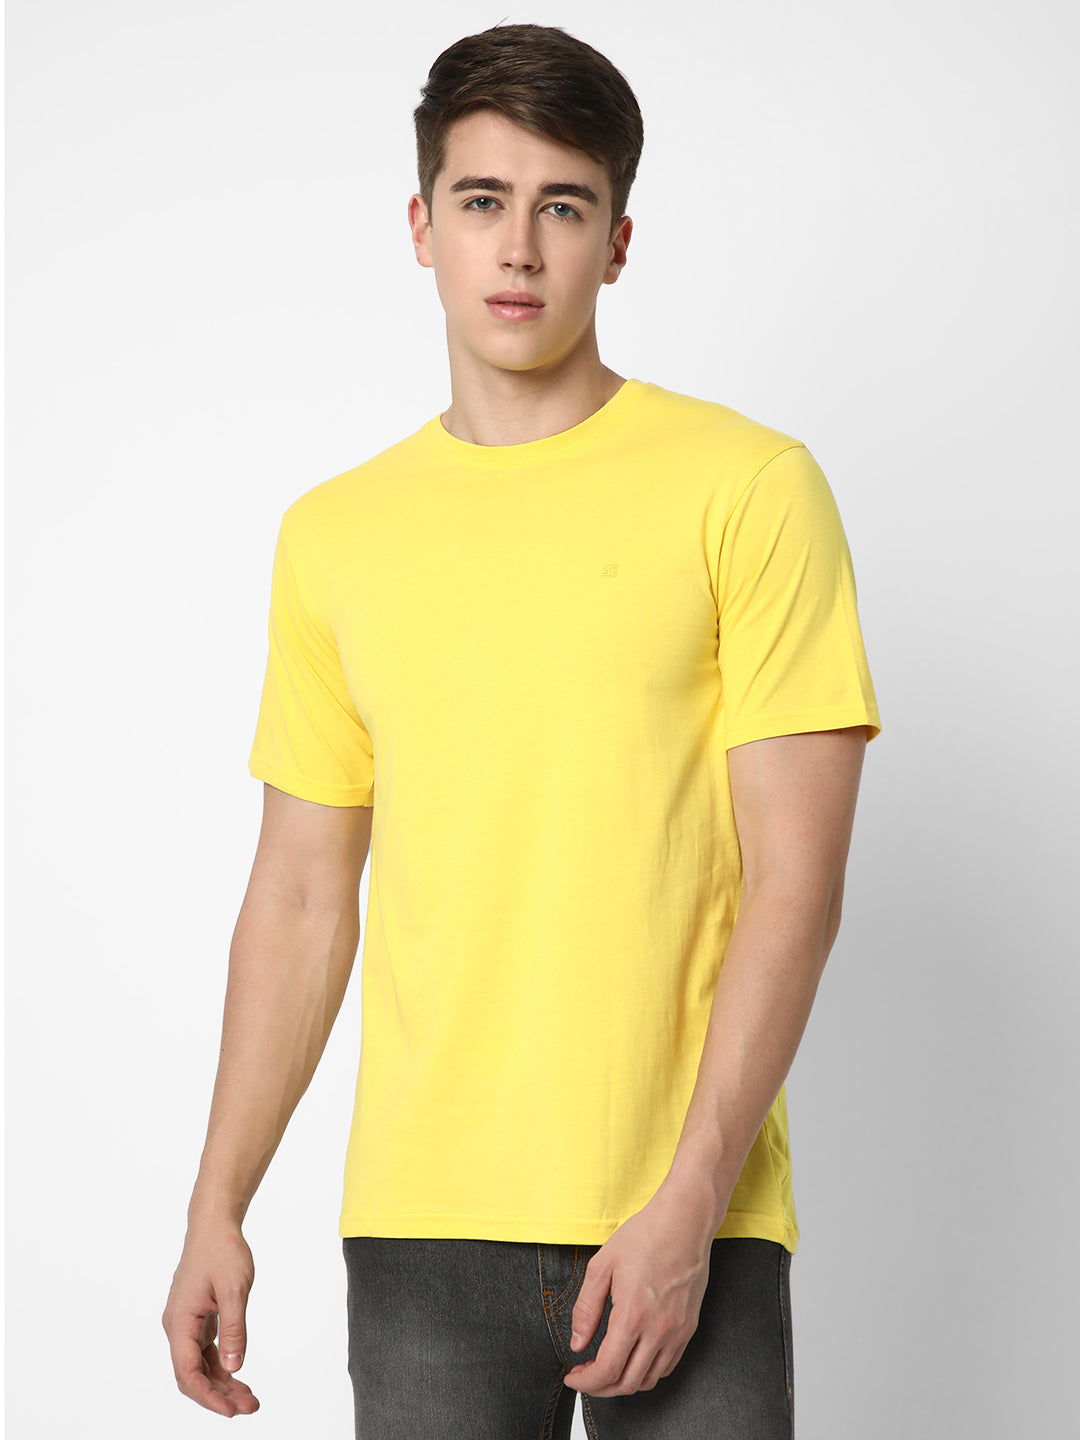 Buy Yellow T-shirt, Men's Casual Half Sleeve Tee